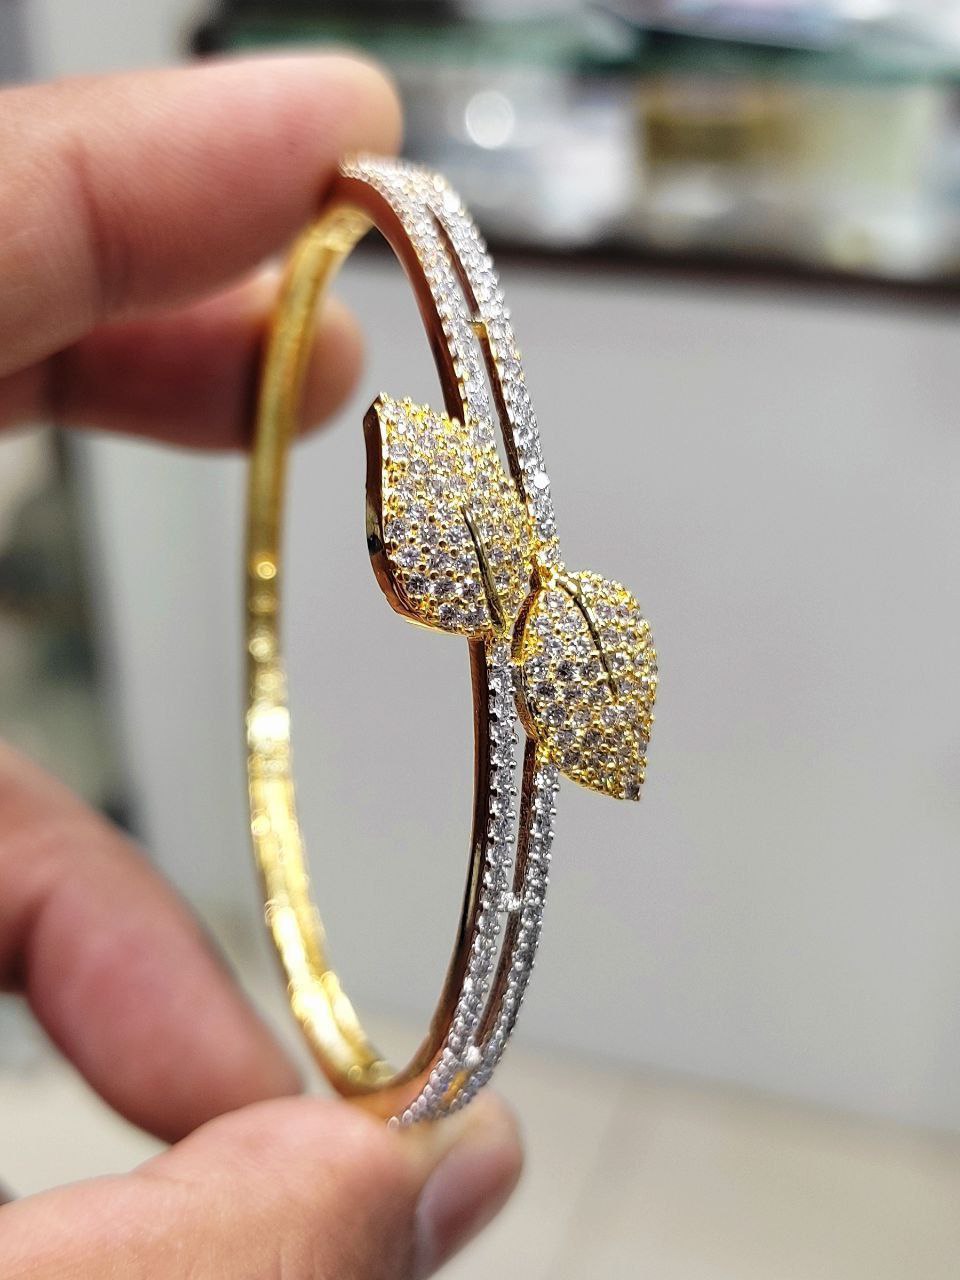 Premium delicate handcrafted American Diamond bracelet